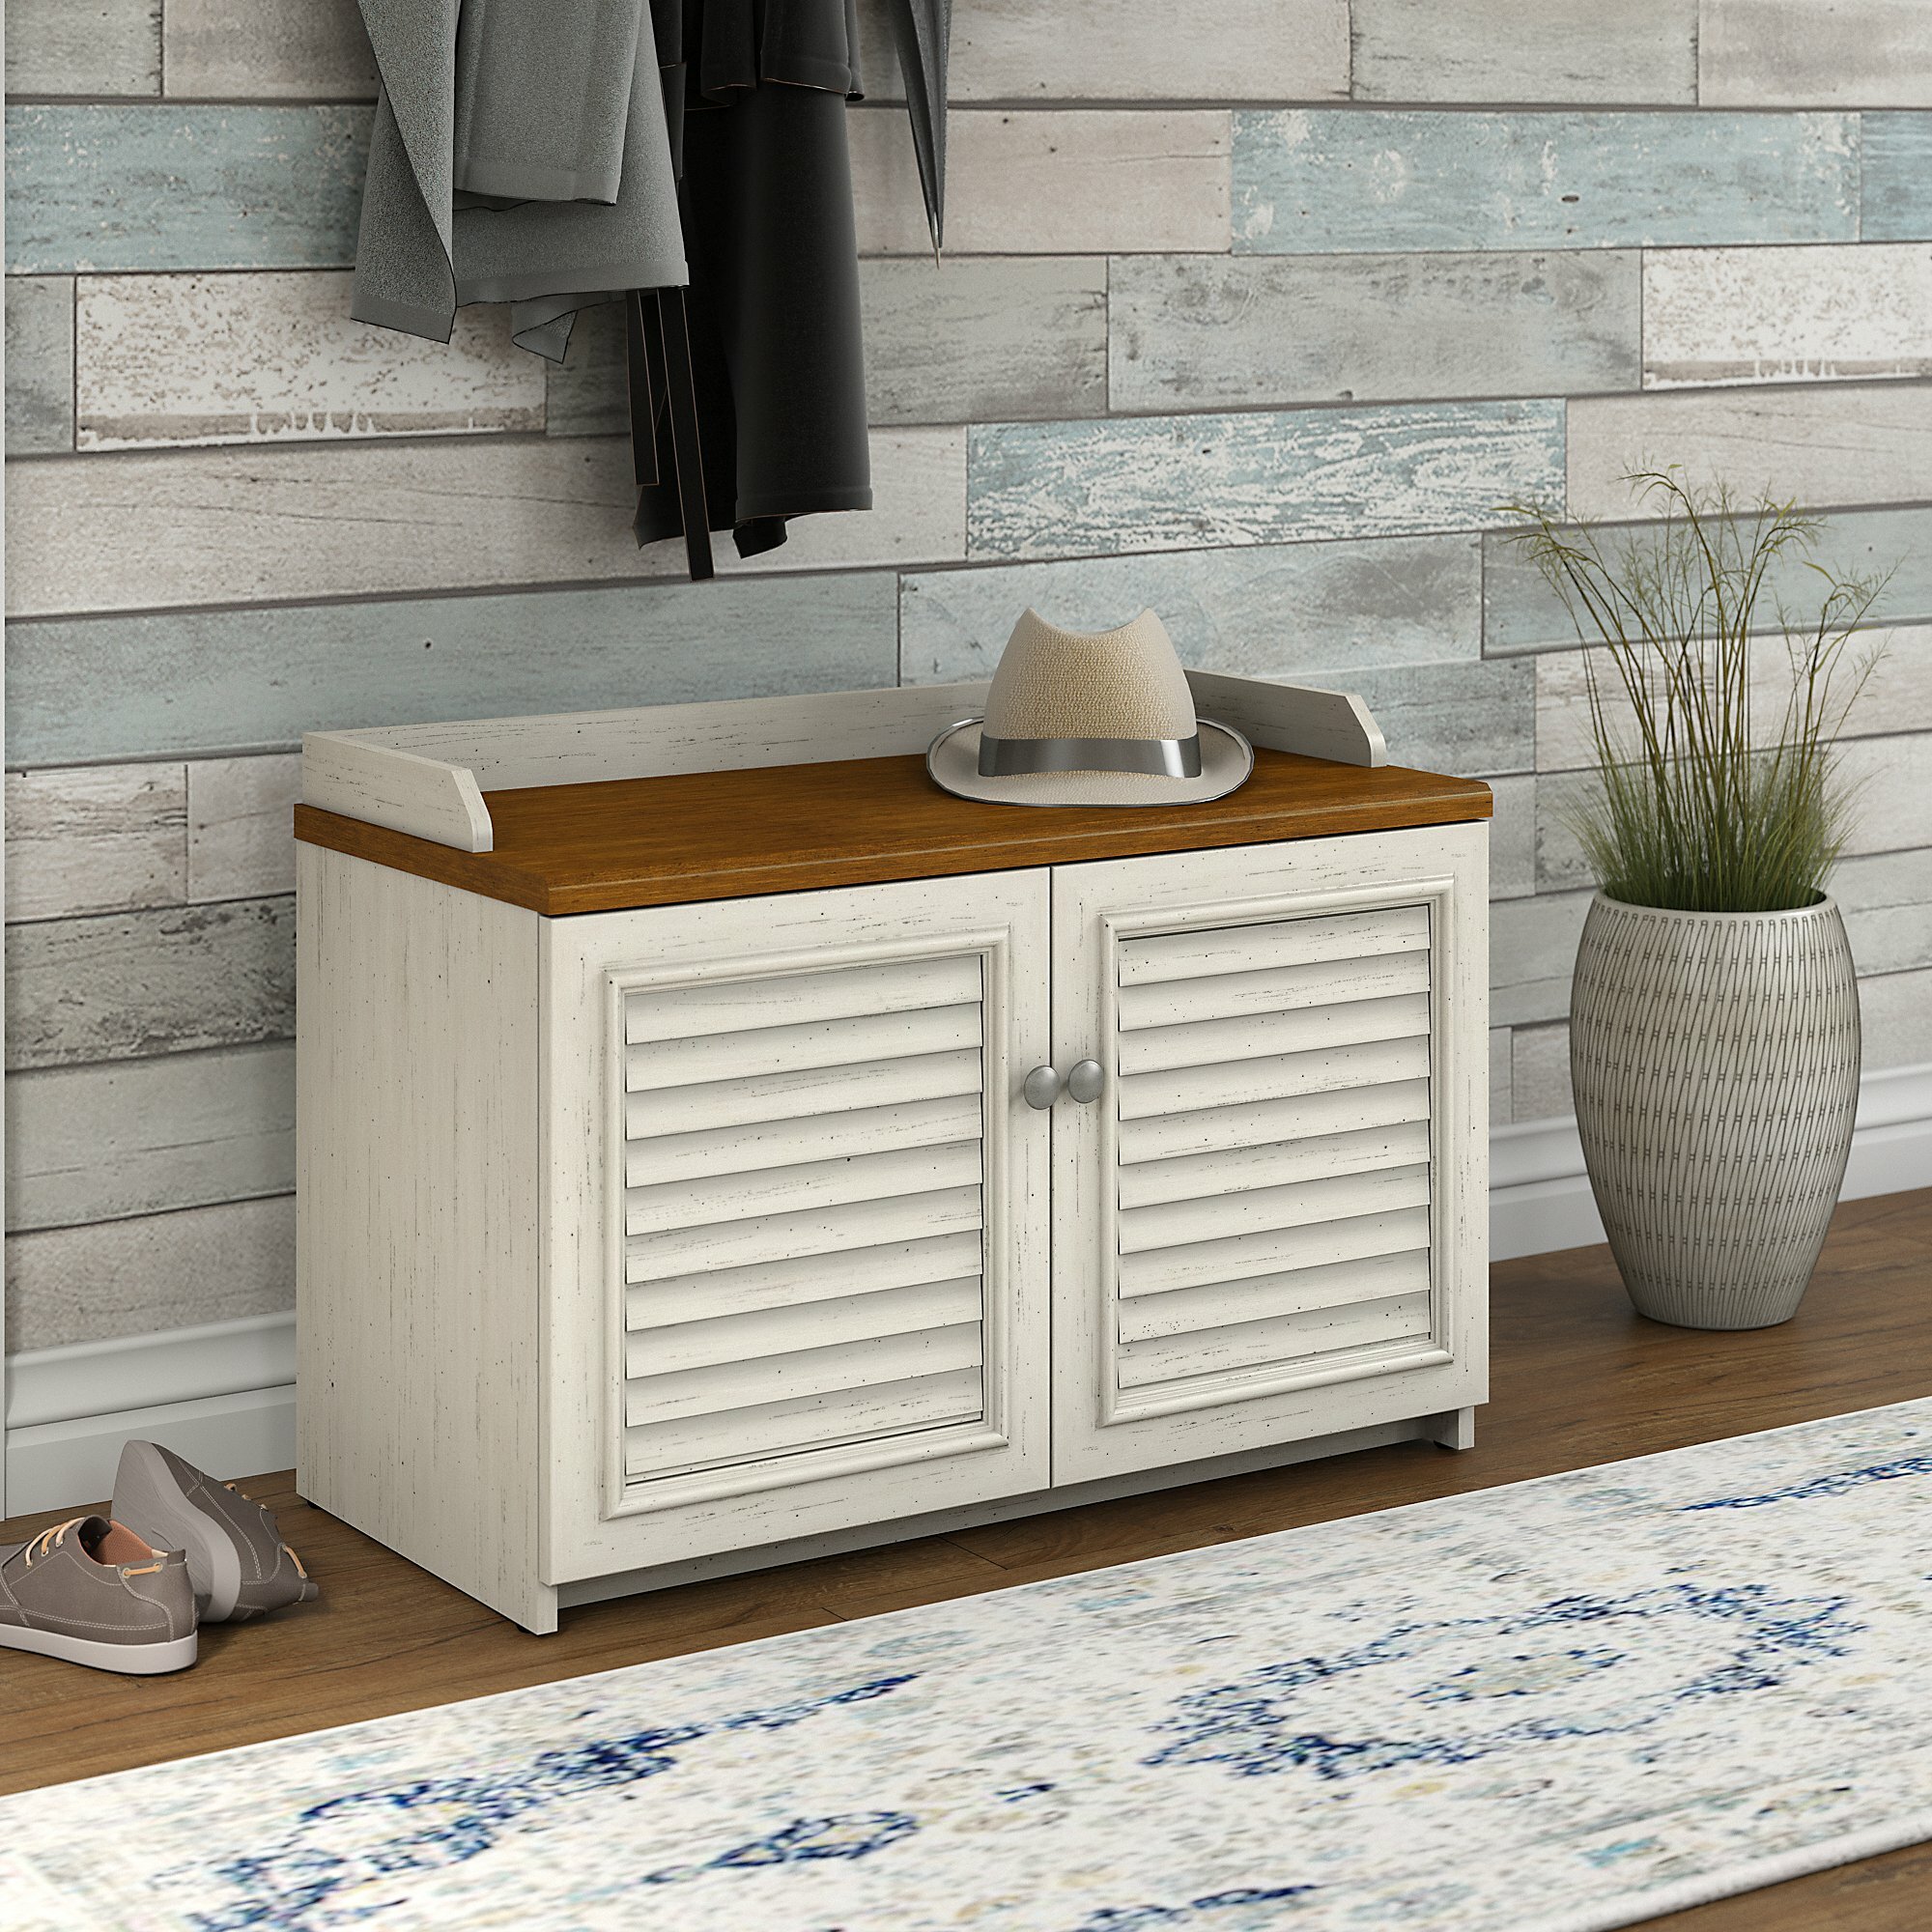 Beachcrest Home Oakridge 8 Pair Shoe Storage Cabinet Reviews